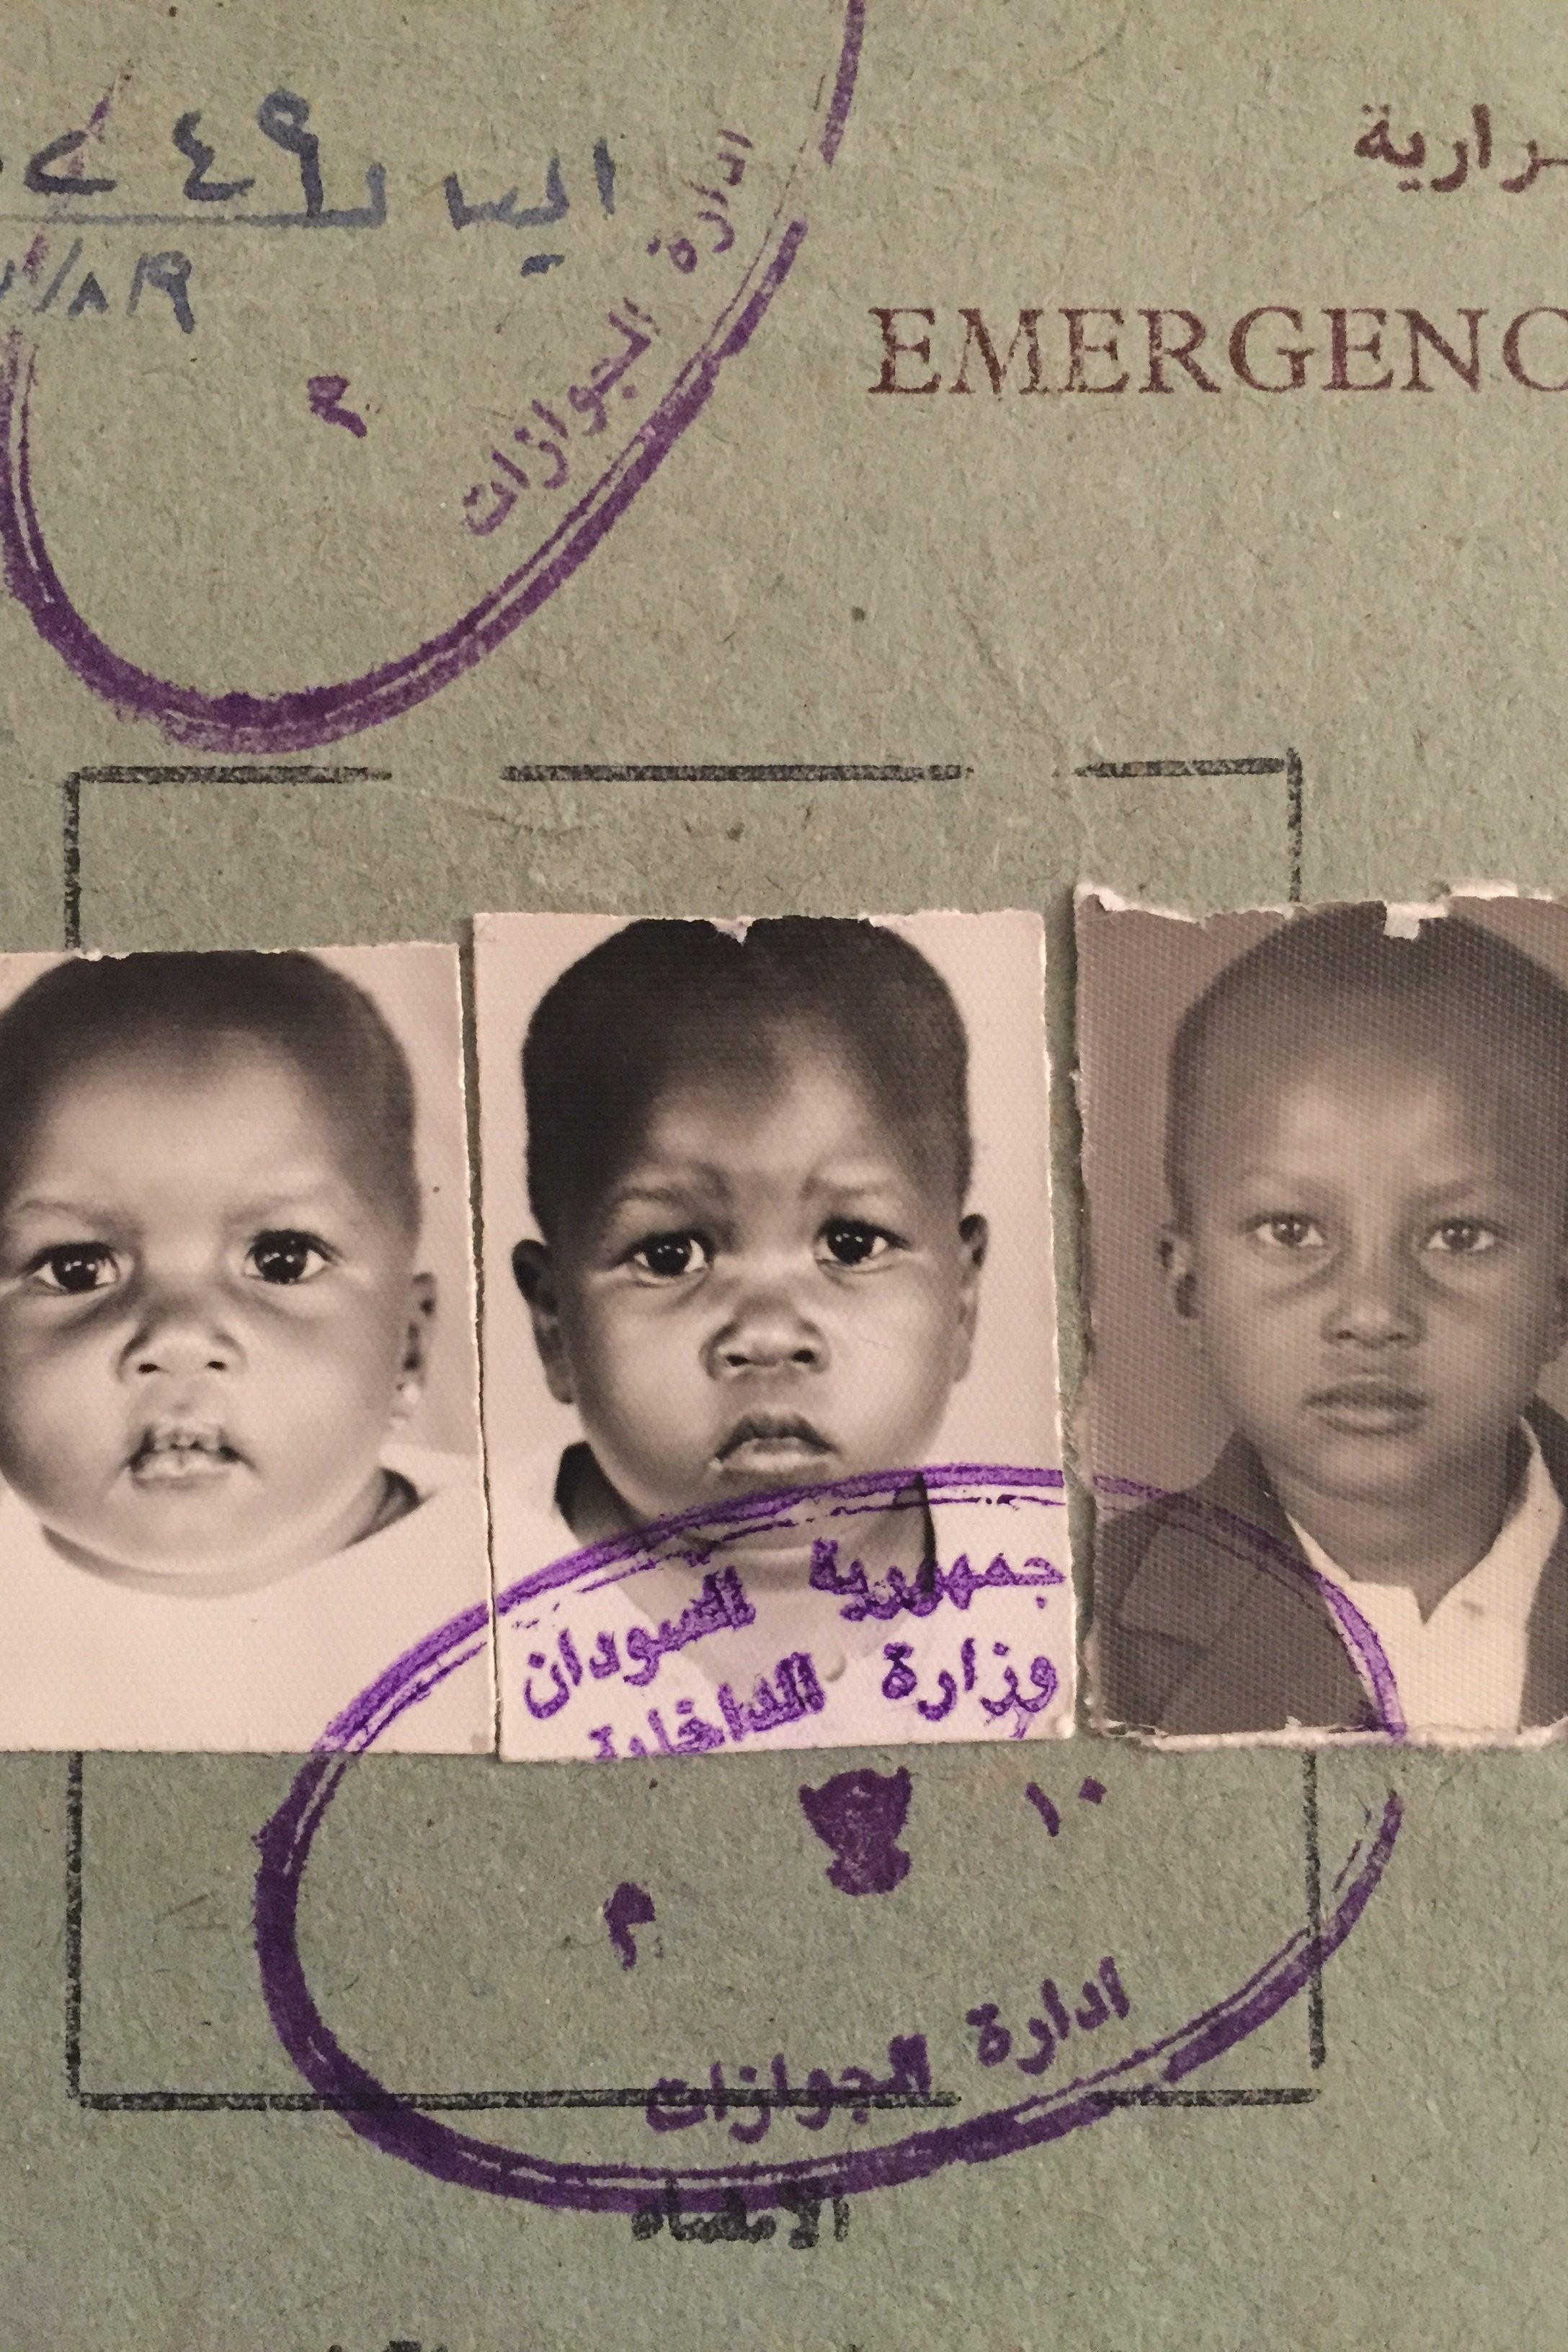 Elizabeth, Anna and Lazarus Donato’s transit documents Issued in Sudan, 1997